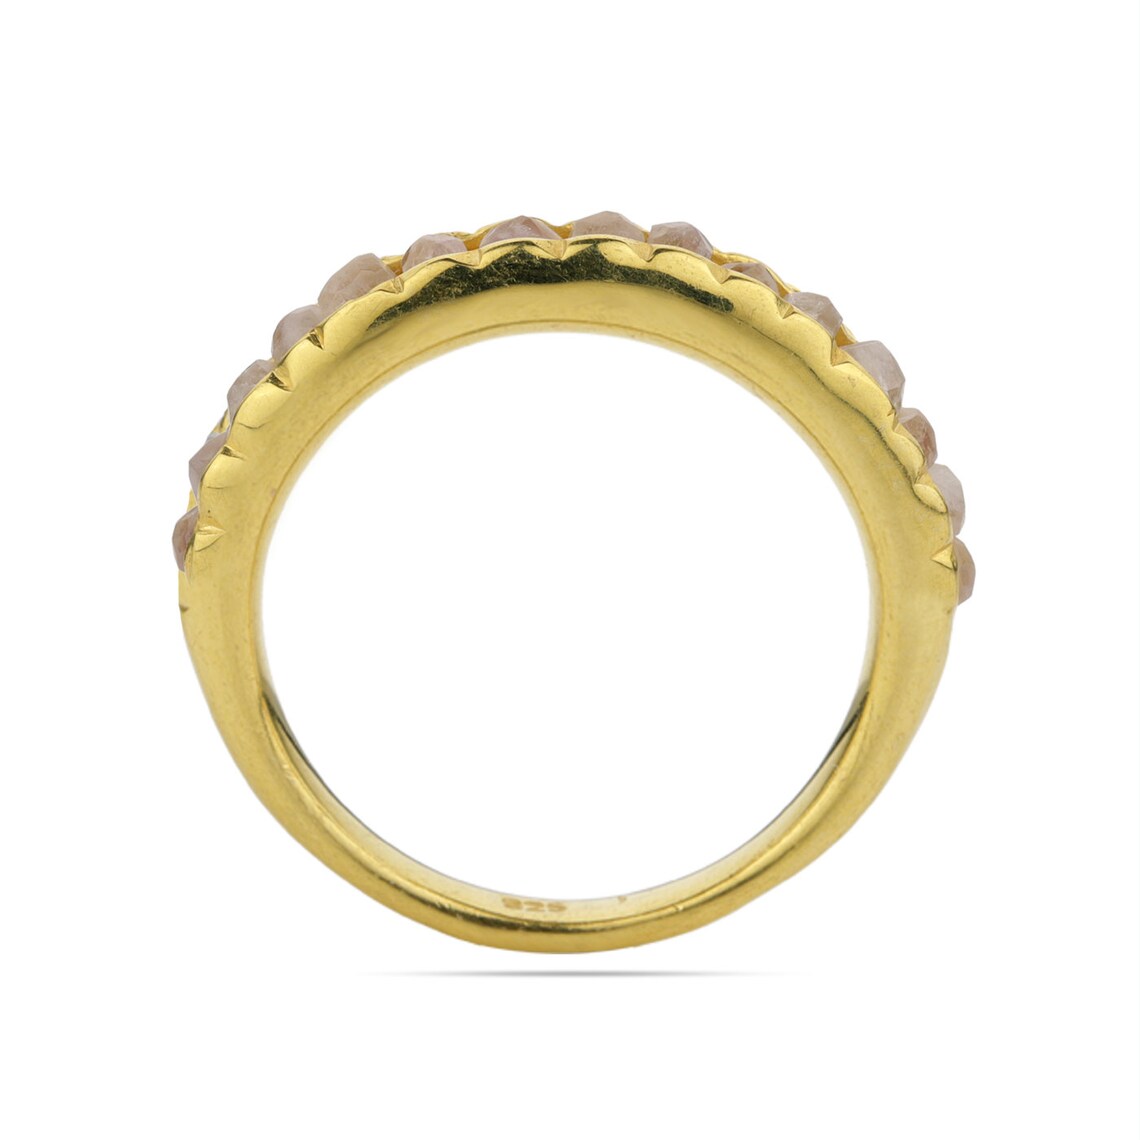 Rainbow Moonstone Beaded Ring - Stacking Ring - June Birthstone - Half Eternity Ring - Gold Moonstone Beads Ring- Bezel Ring - Delicate Ring